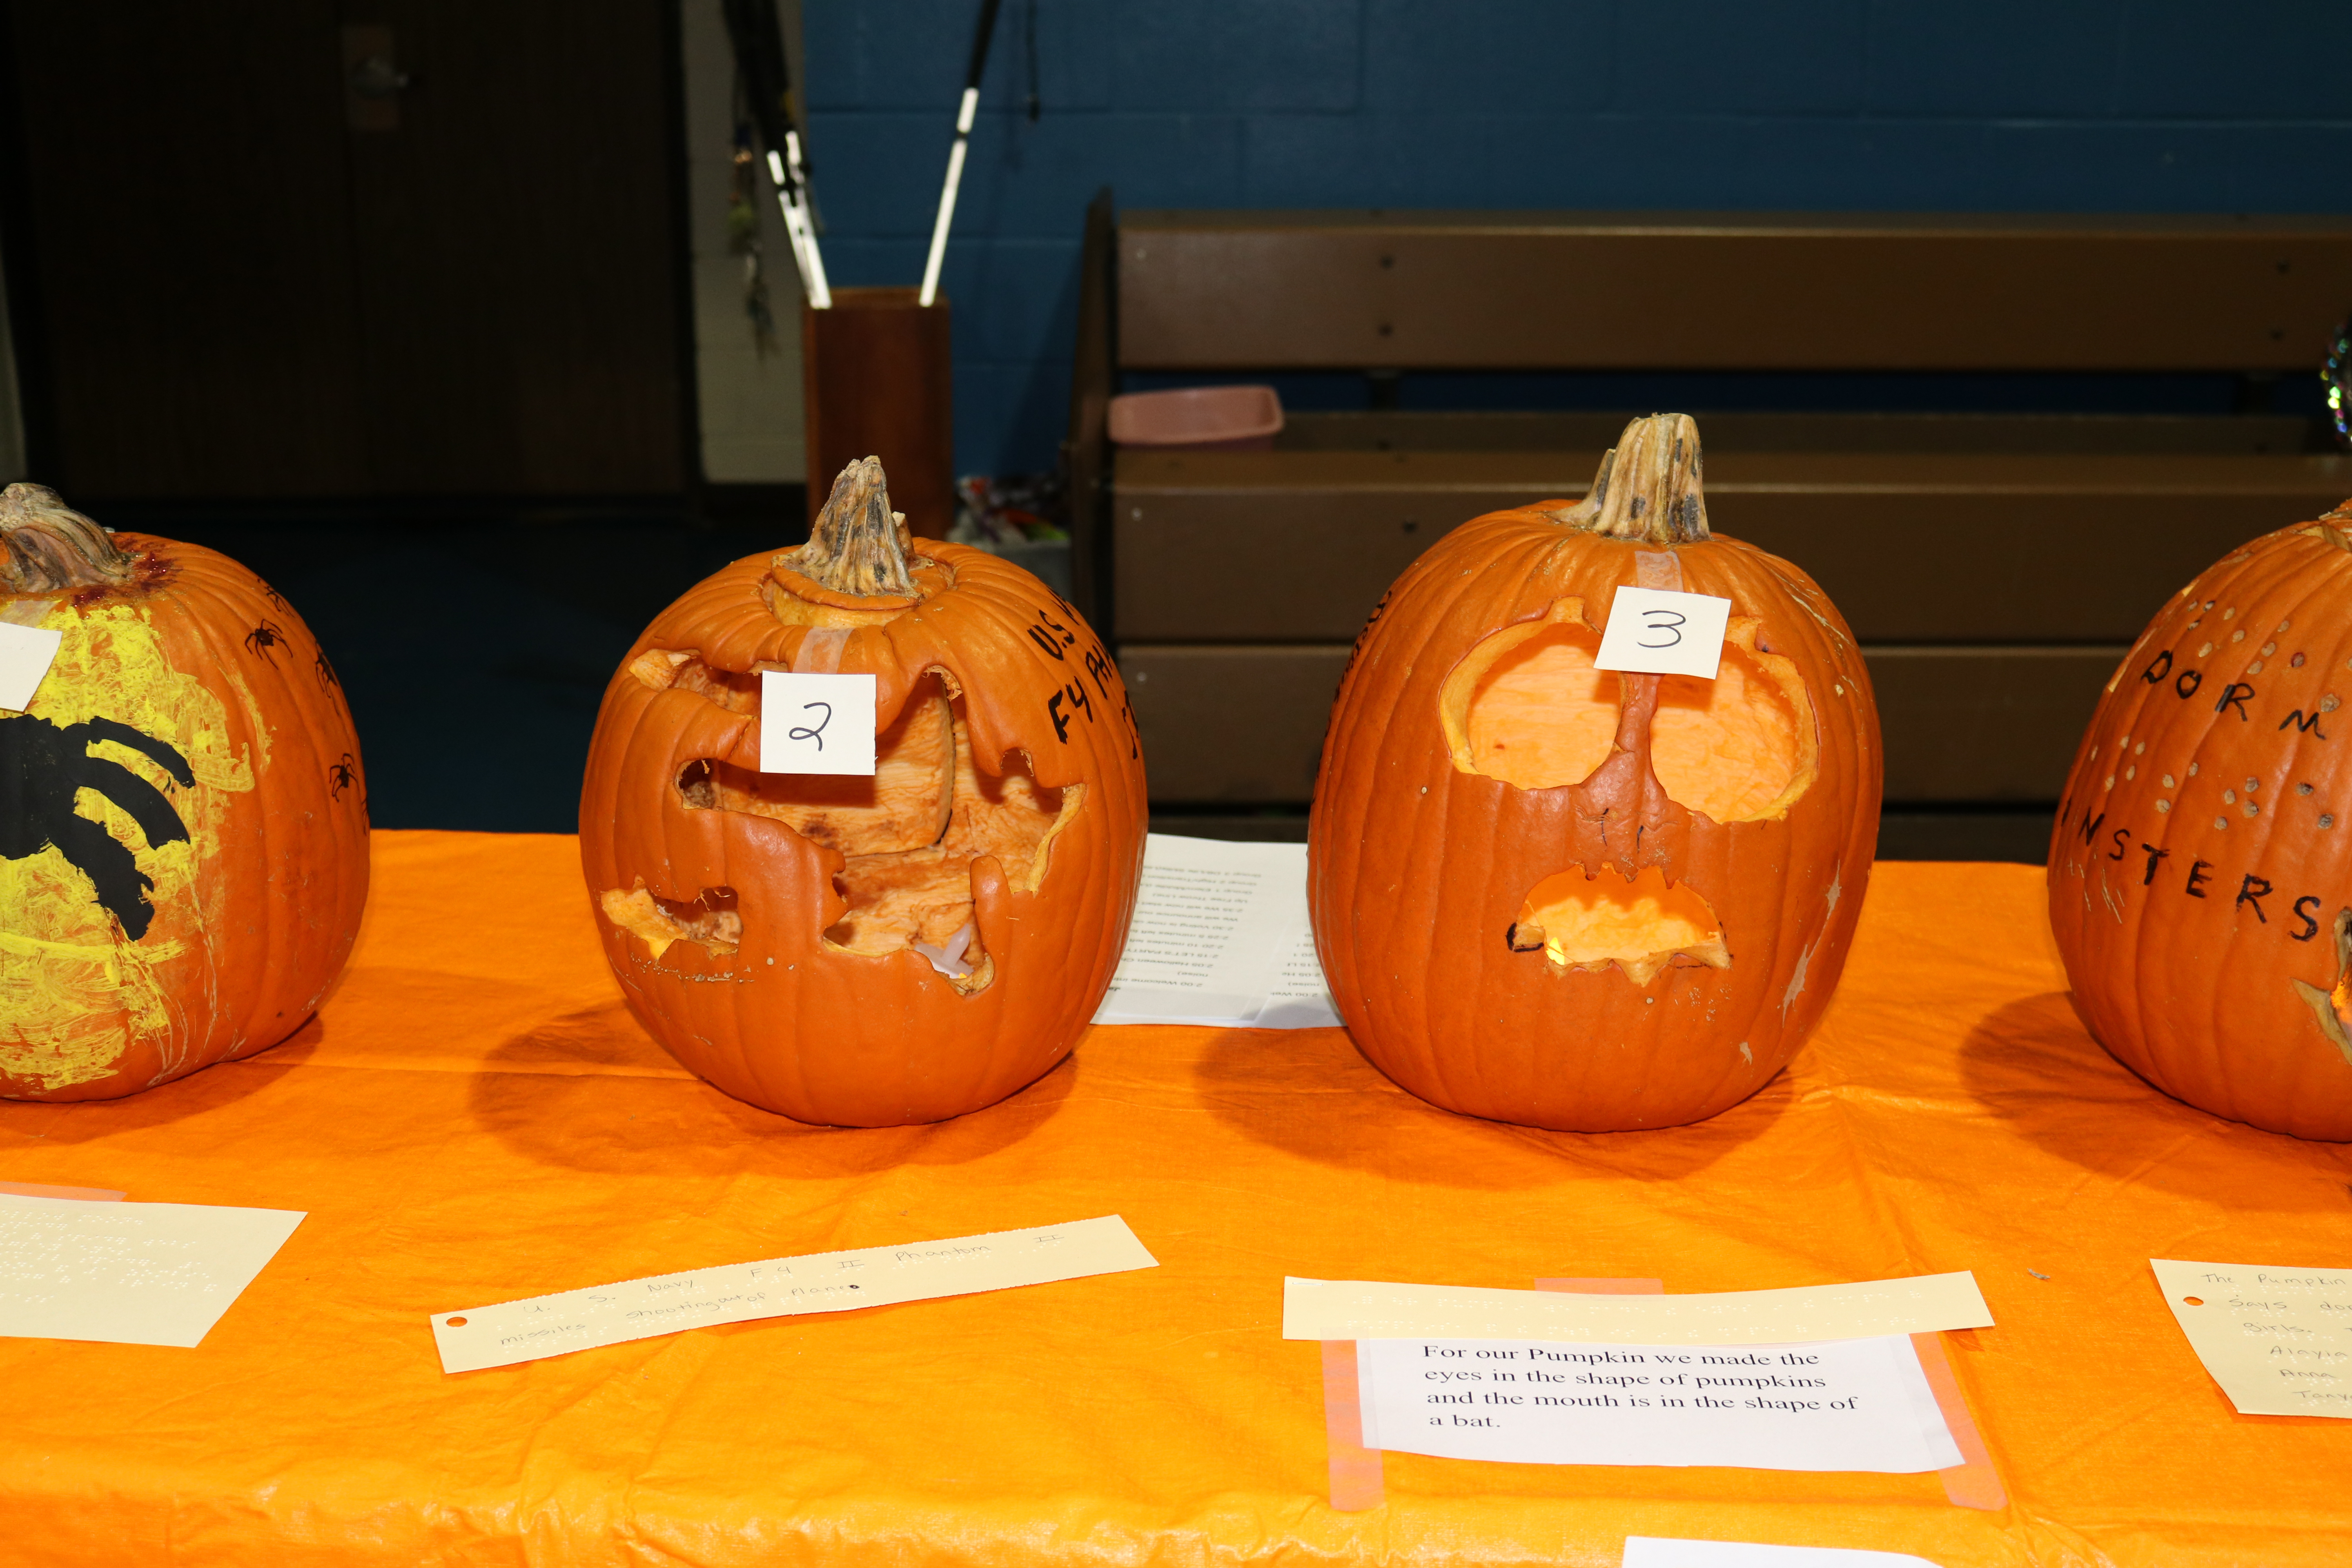 Four carved pumpkins on display.